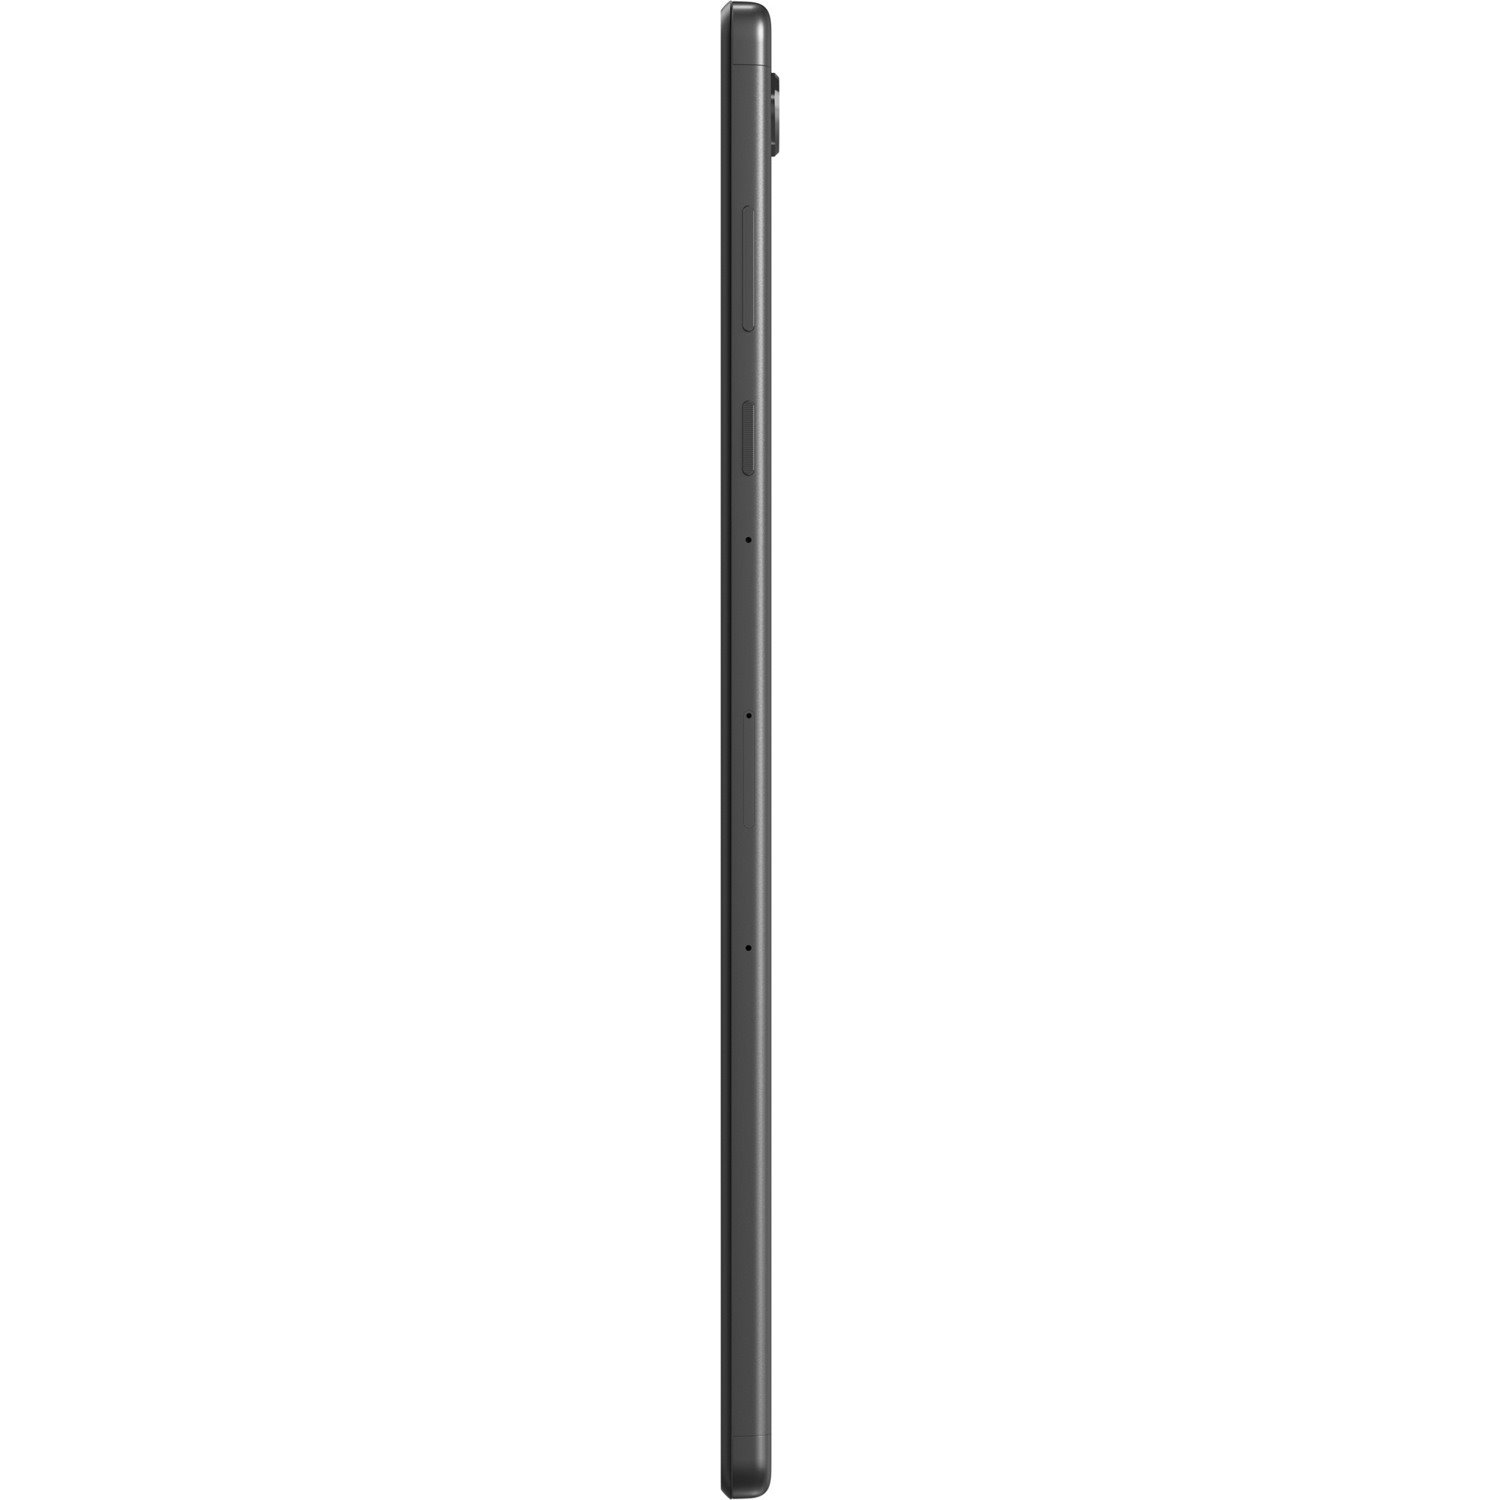 Lenovo Tab M10 FHD Plus (2nd Gen) TB-X606F Tablet - 10.3" WUXGA - MediaTek SoC Platform - 4 GB - 64 GB Storage - Android 9.0 Pie - Iron Gray